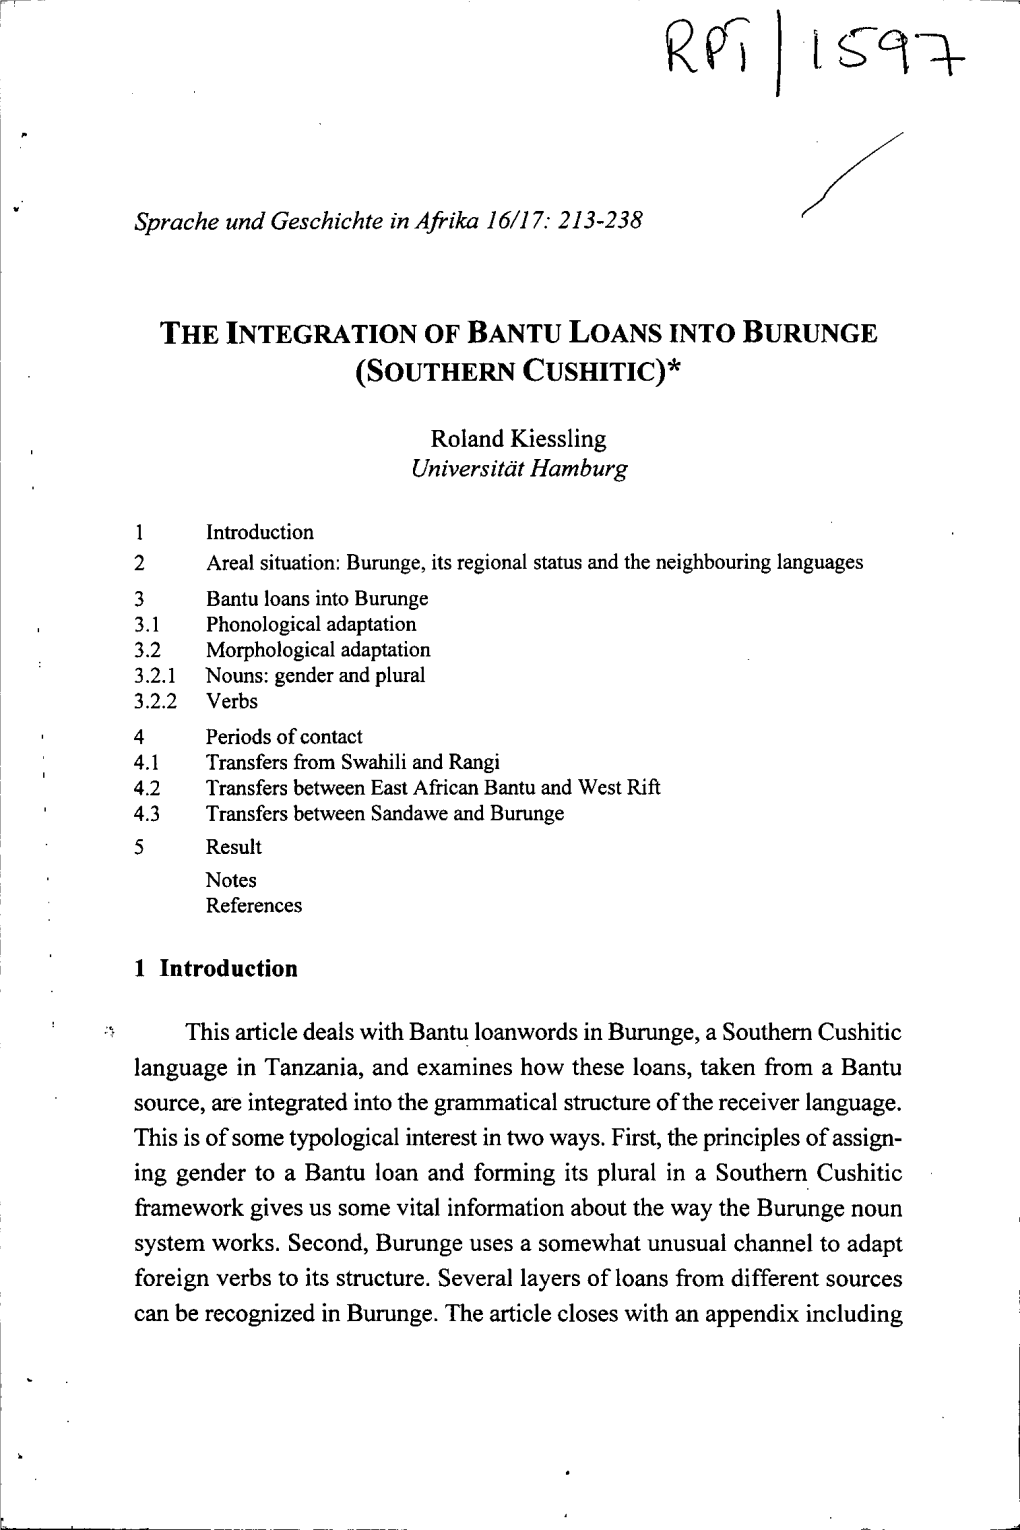 The Integration of Bantu Loans Into Burunge (Southern Cushitic)*